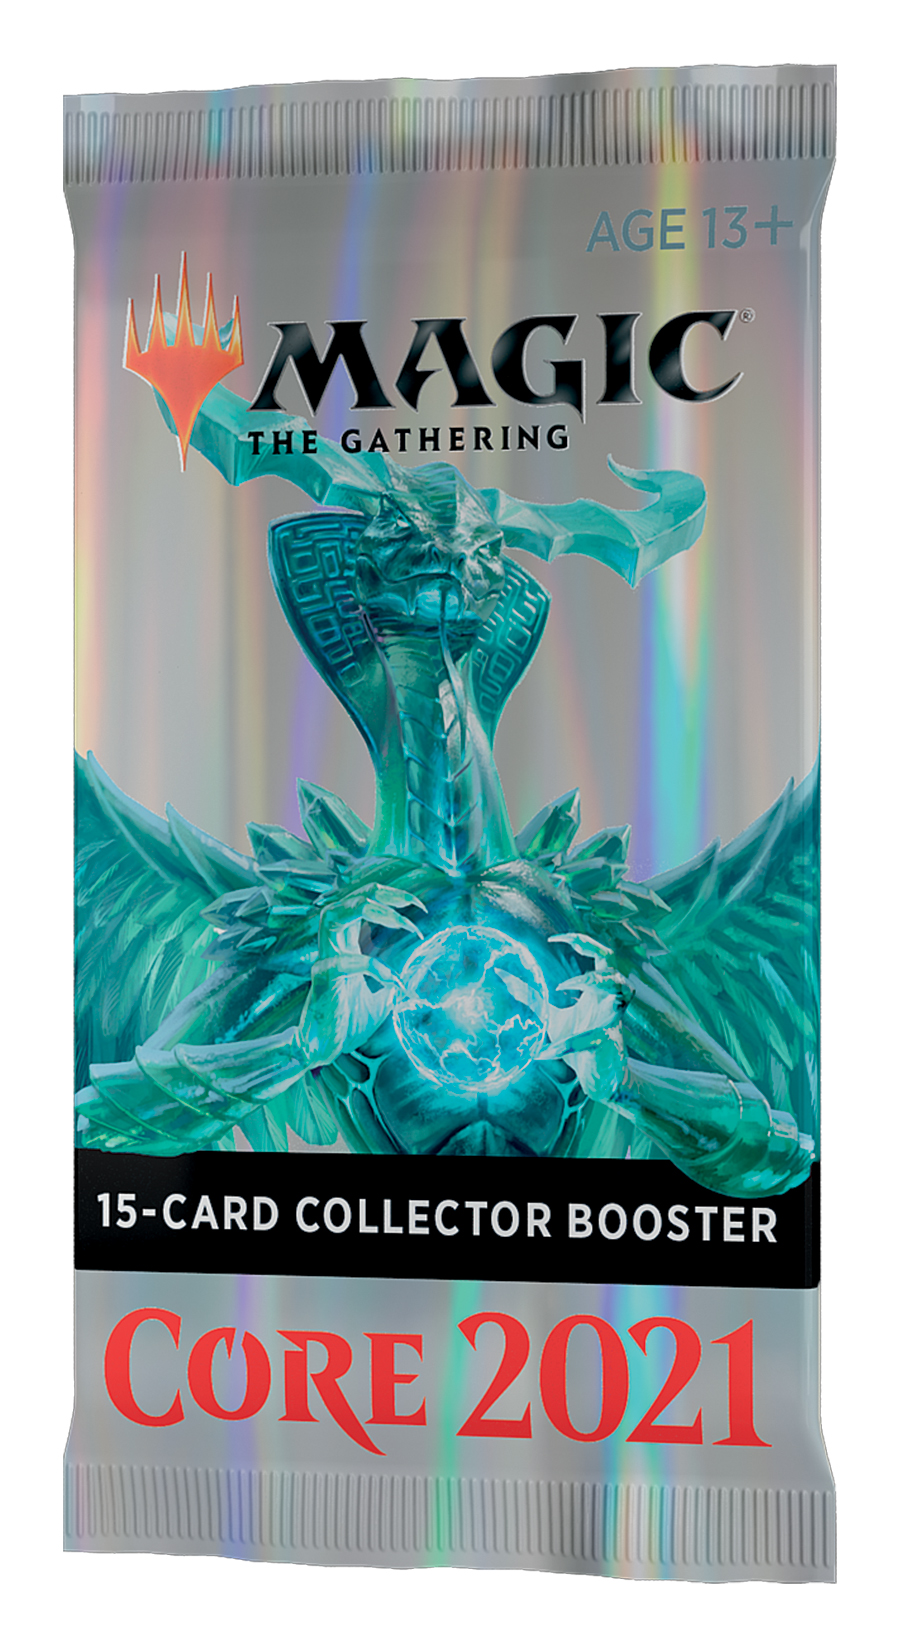 Бустер Wizards of the Coast Коллекционный Core set 2021, на английском